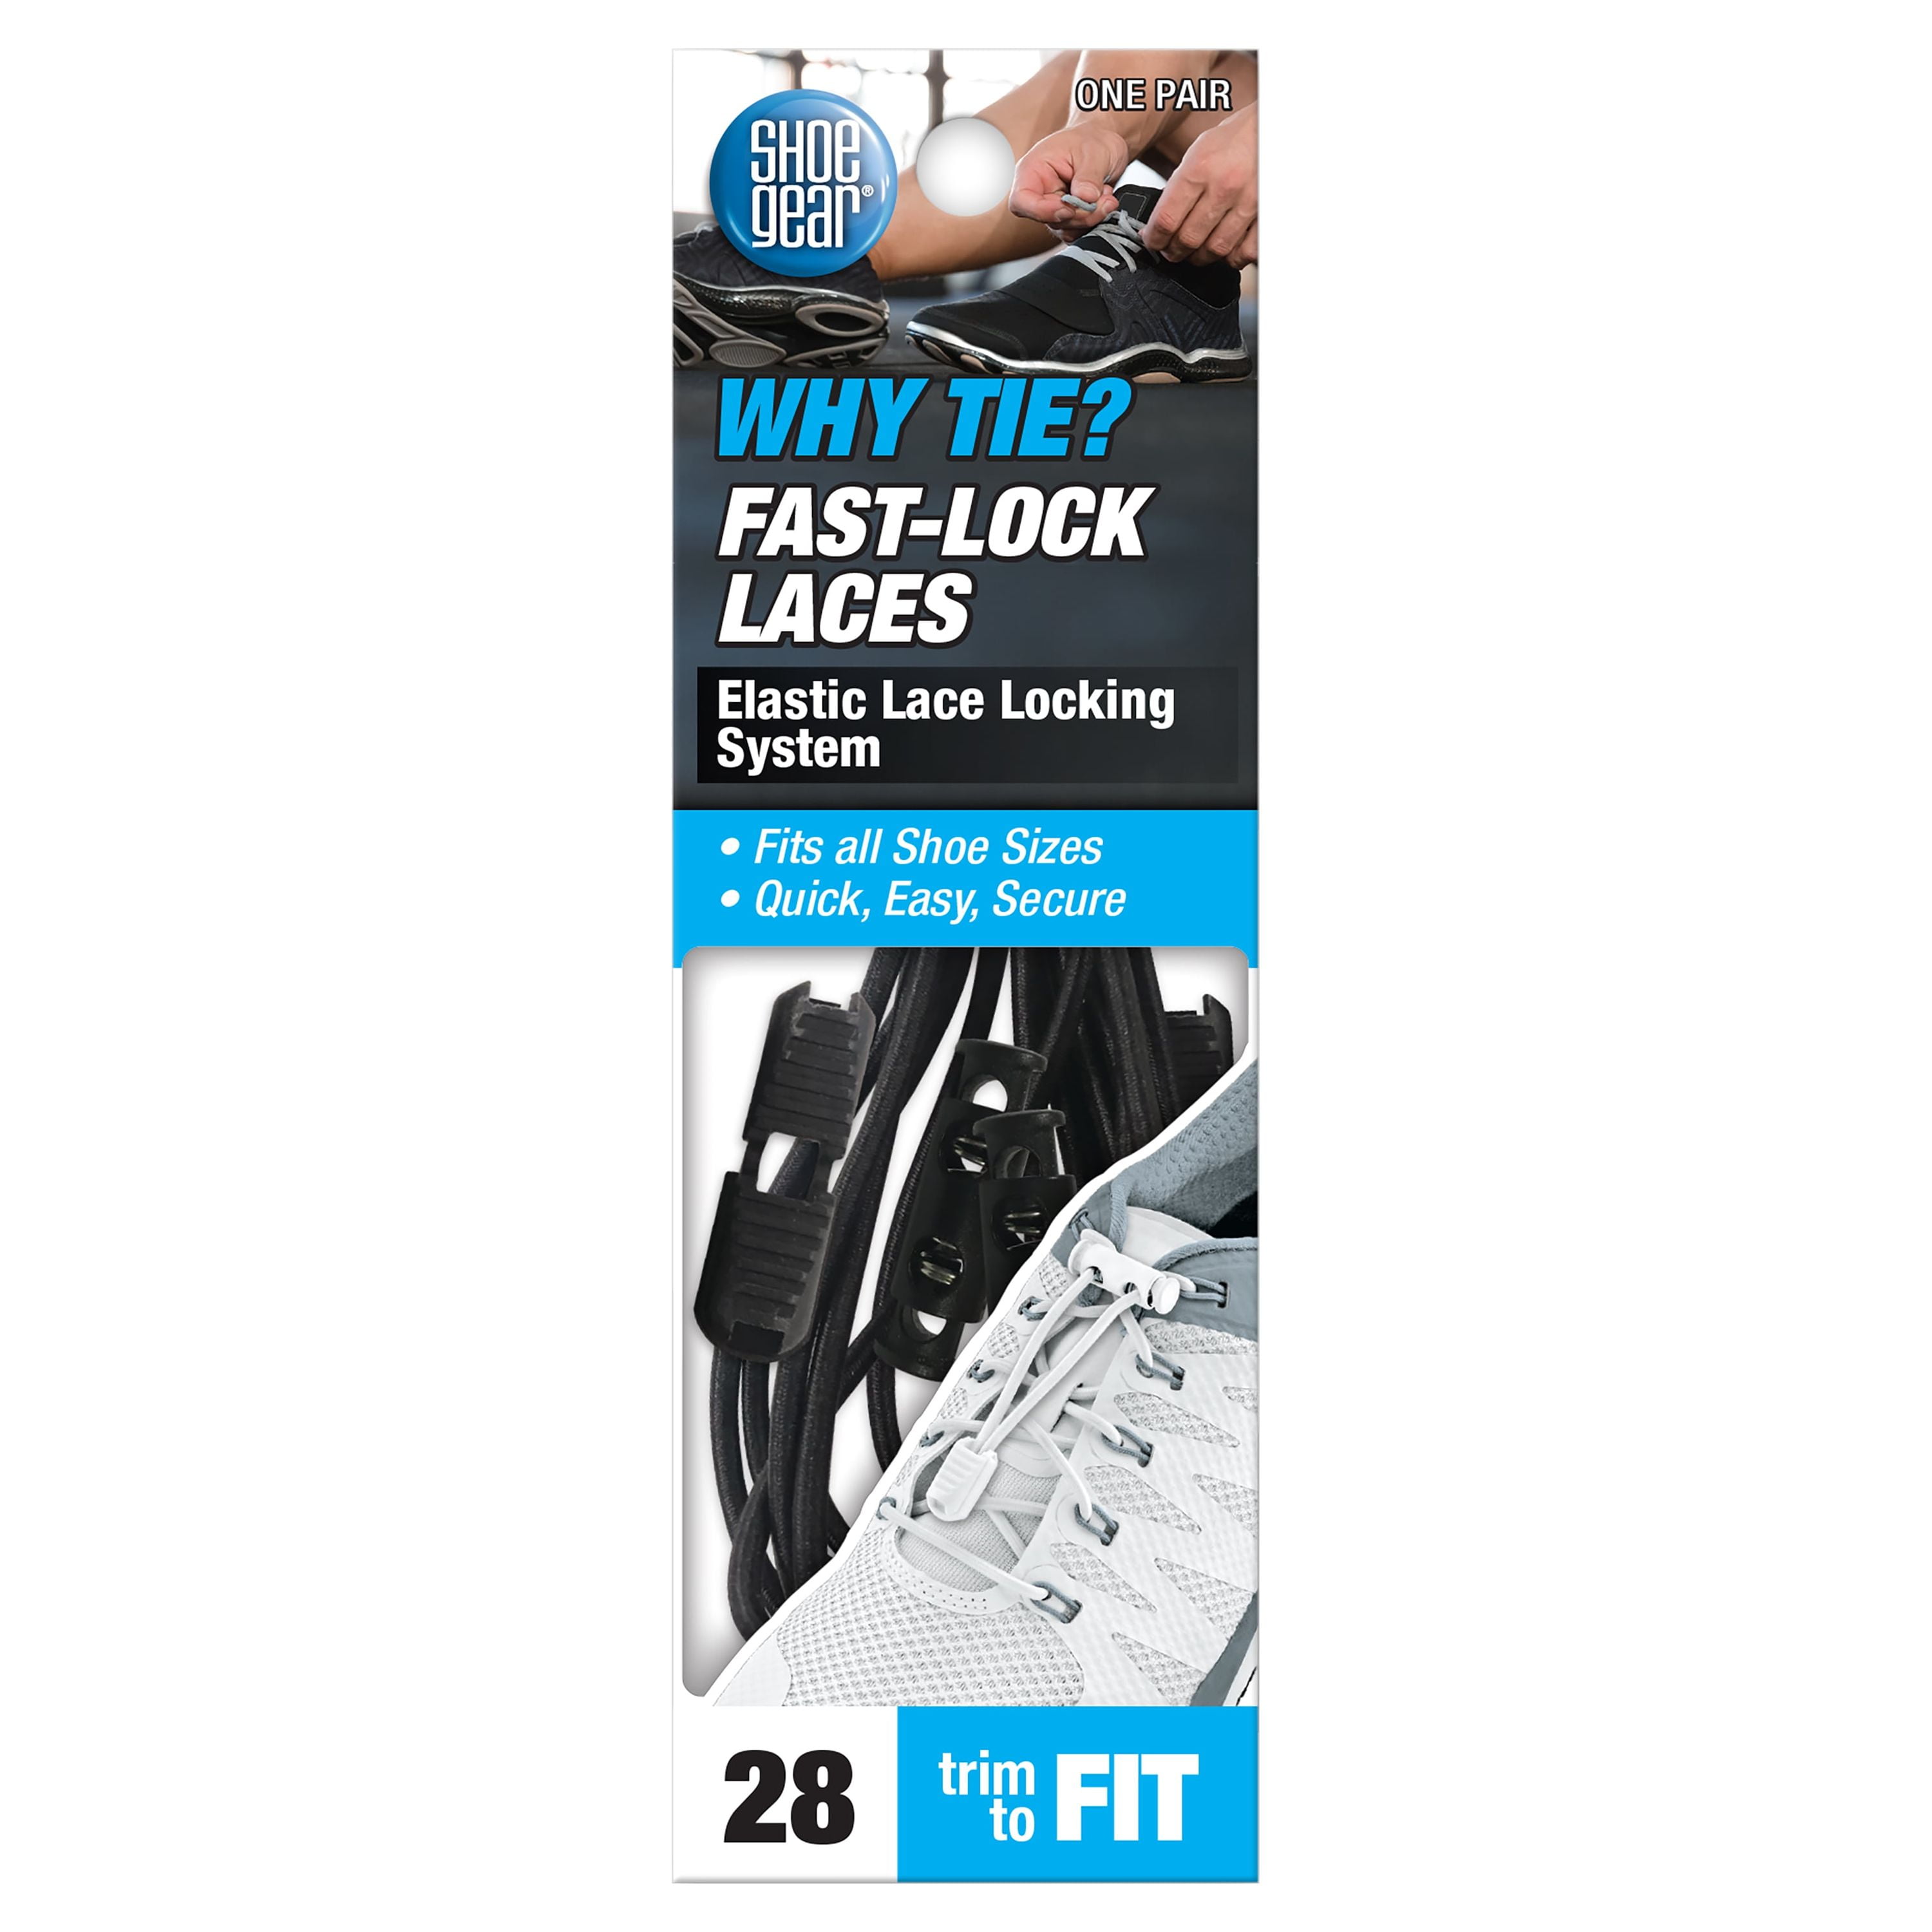 Shoe Gear Why Tie Fast-Lock Laces - 1 Each